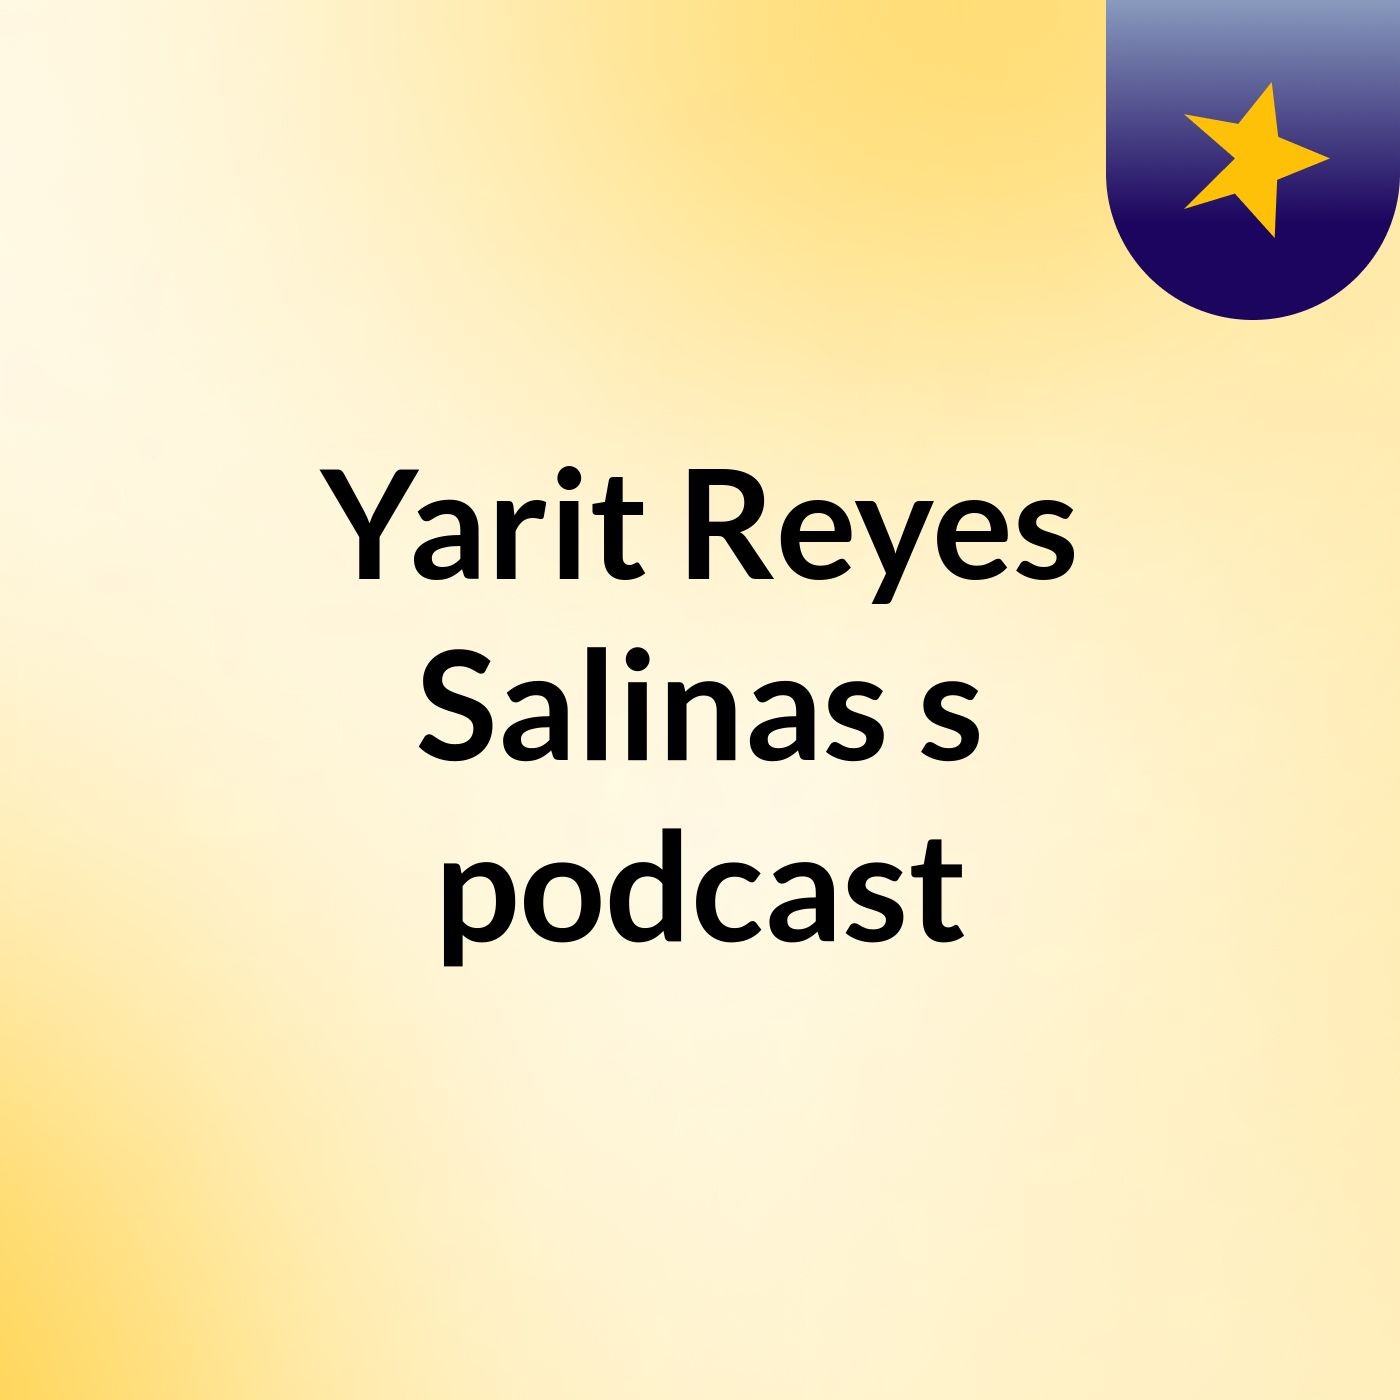 Yarit Reyes Salinas's podcast